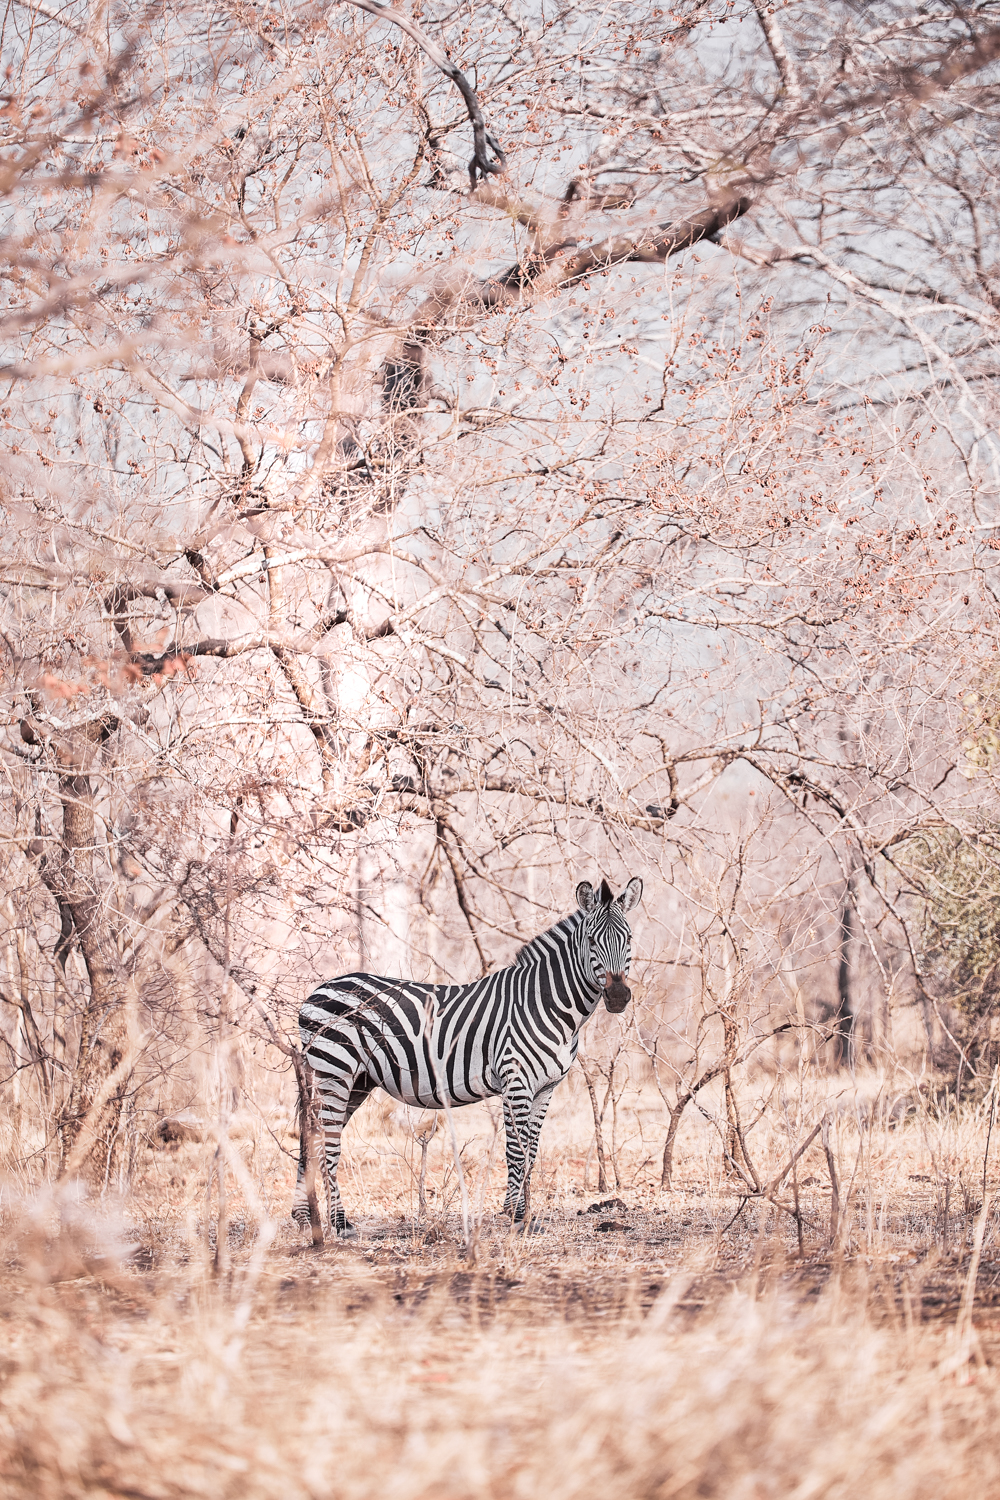 A zebra in Africa (credit Nico Wills)